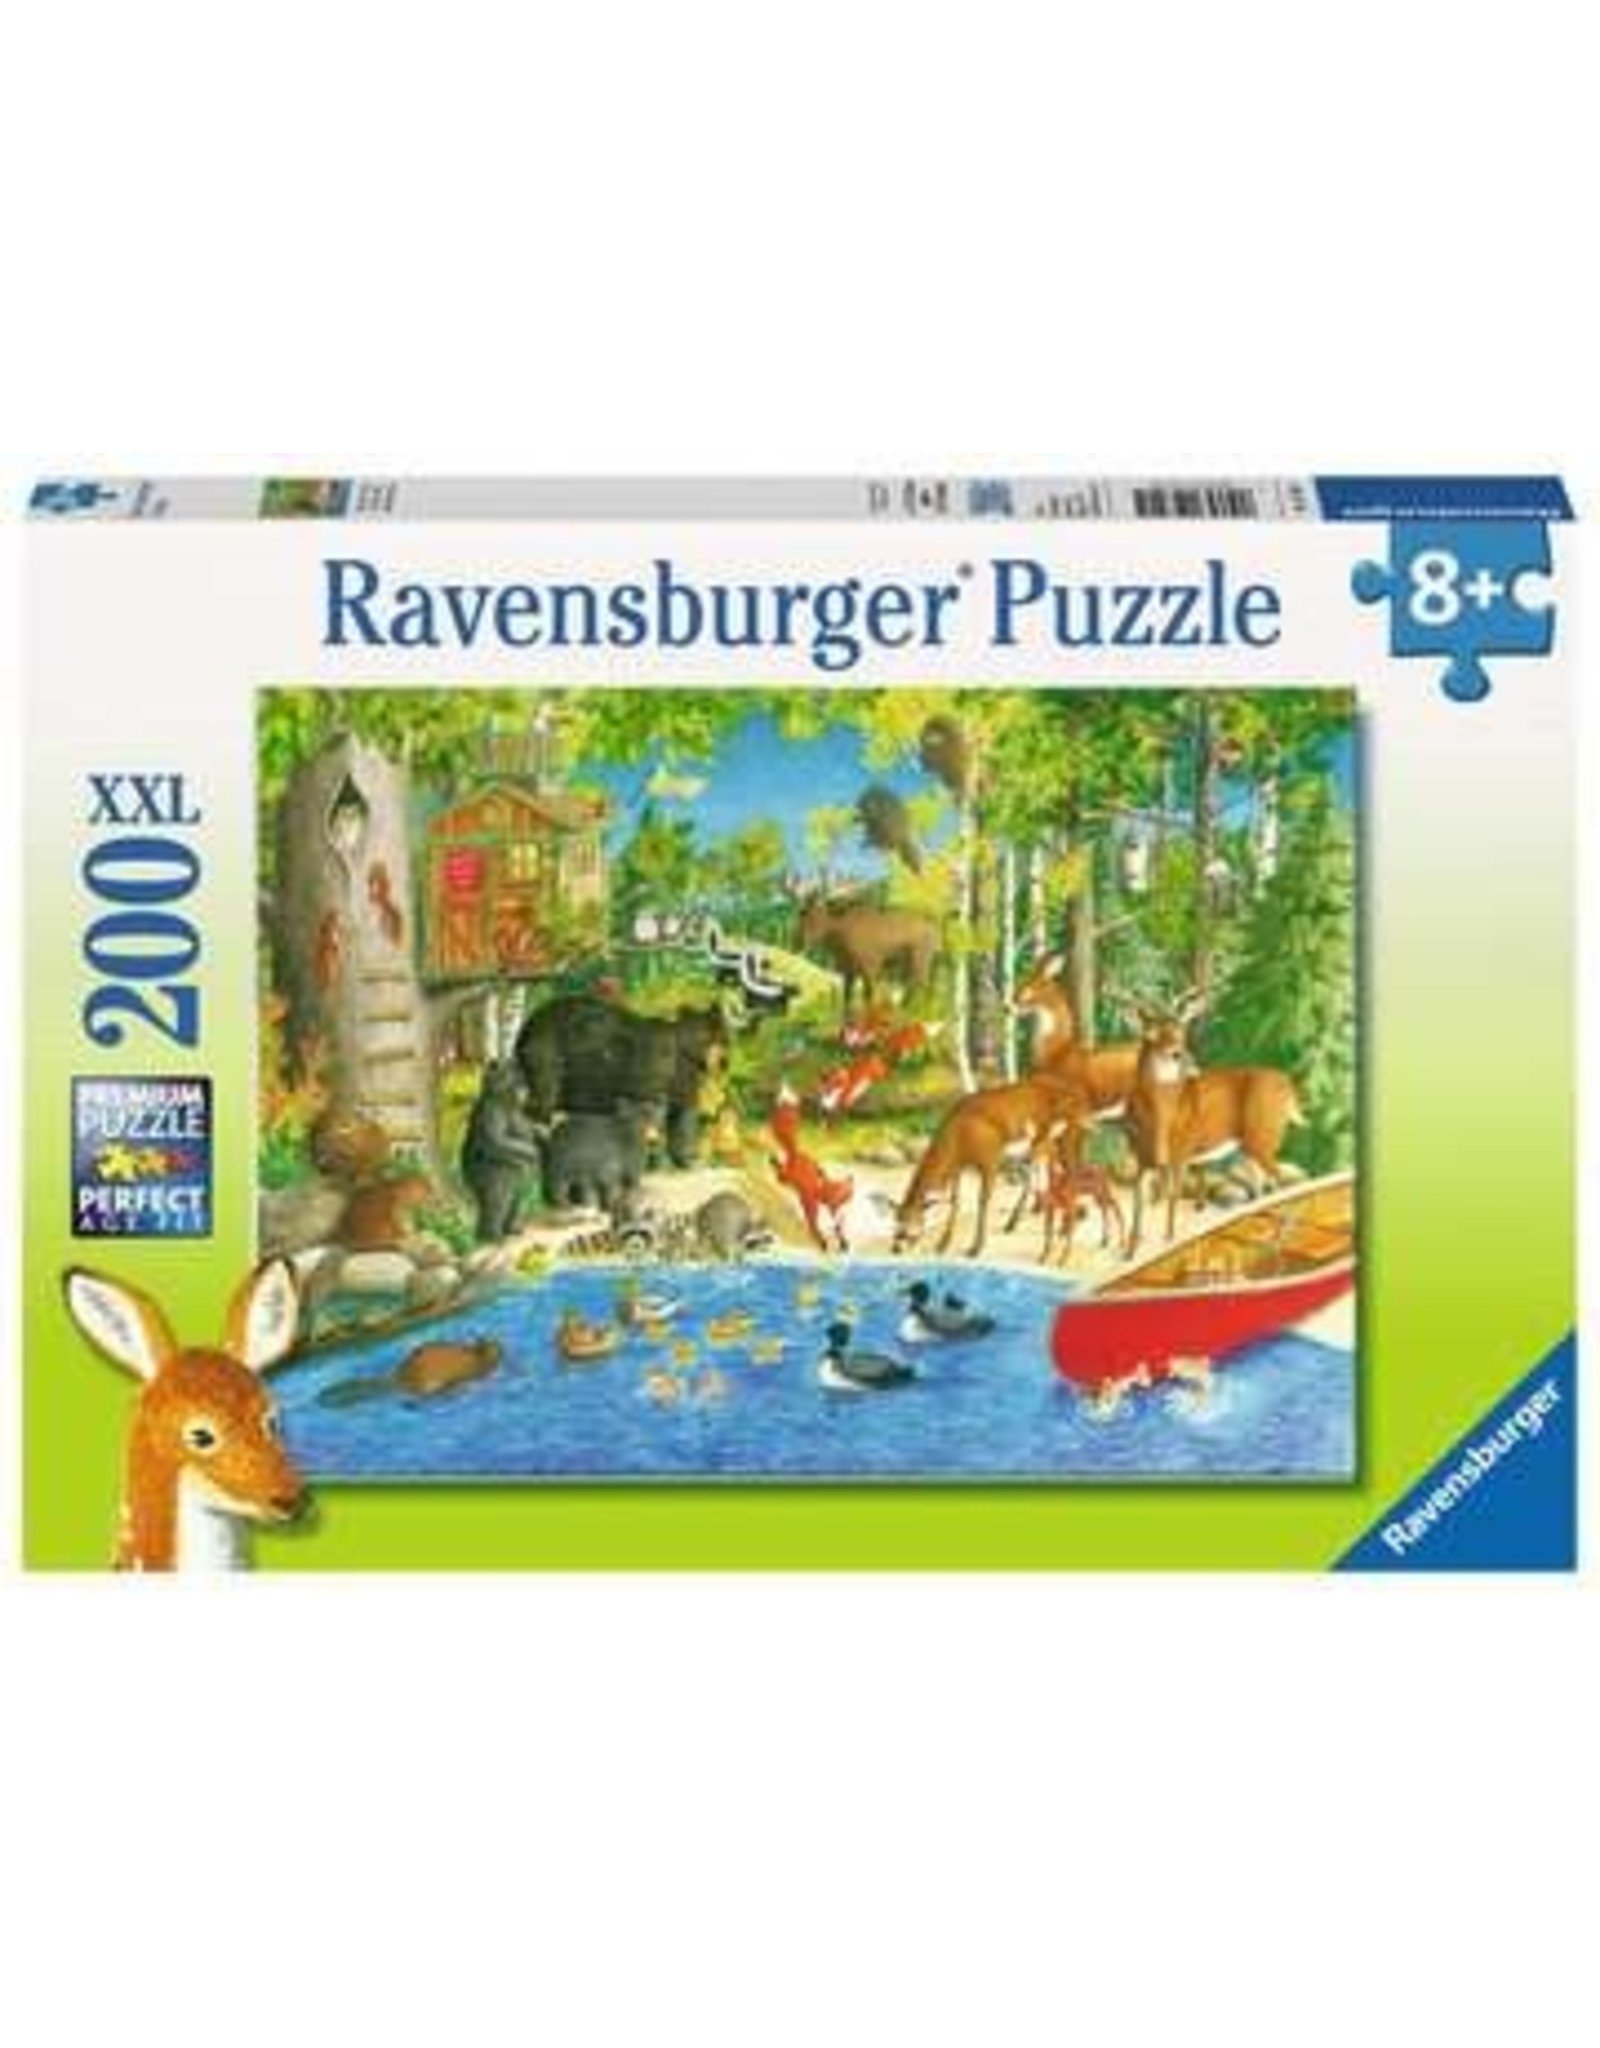 Ravensburger 200 Piece Woodland Friends XXL Puzzle